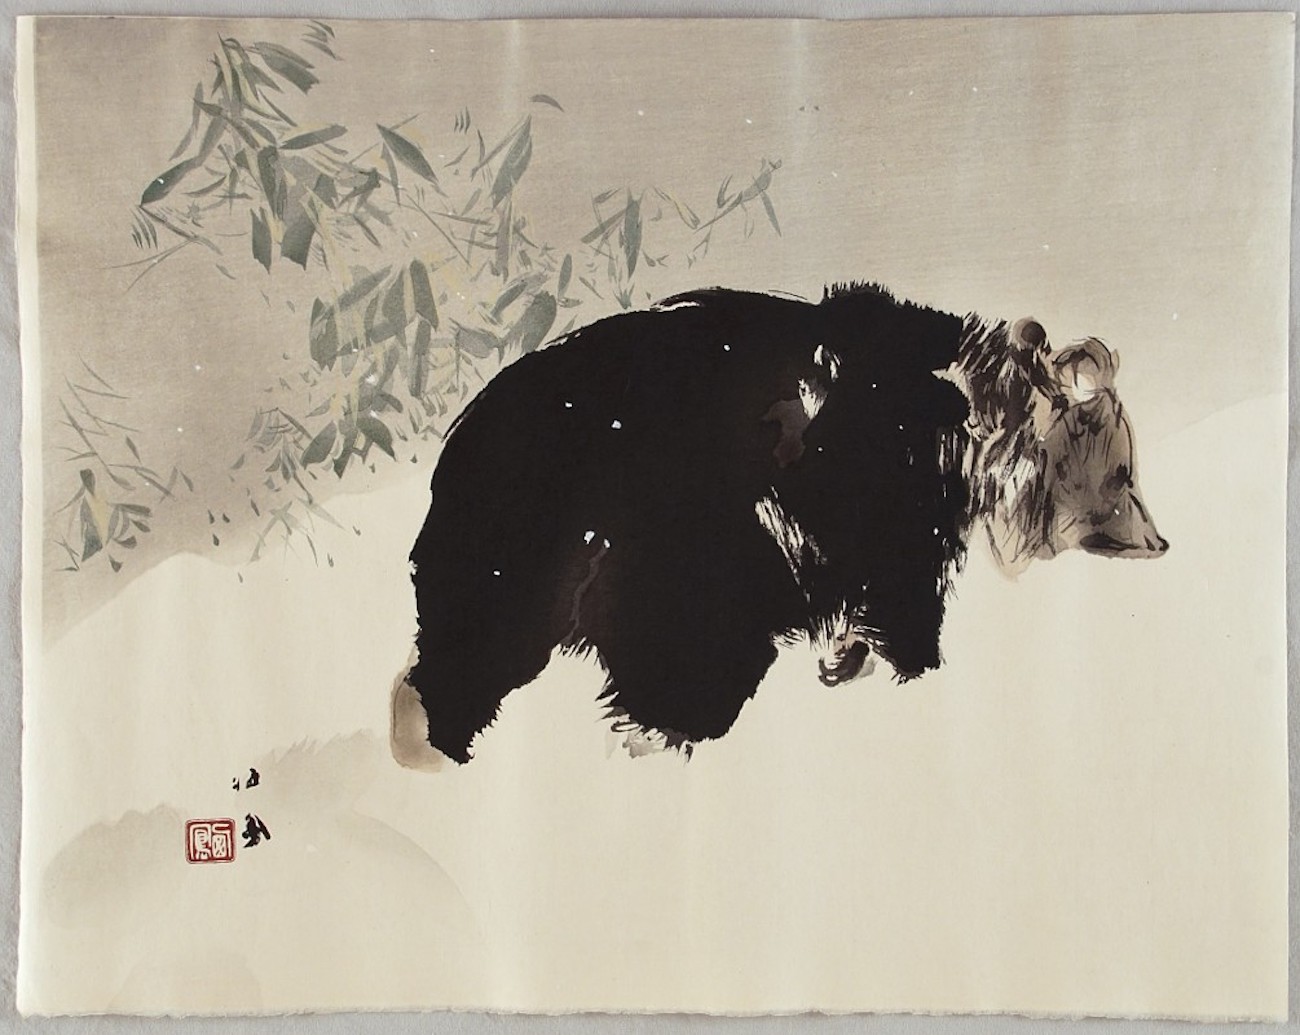 Bear In Snow by Takeuchi Seihō - 1940 - 39.7 x 50.5 cm National Museum of Asian Art